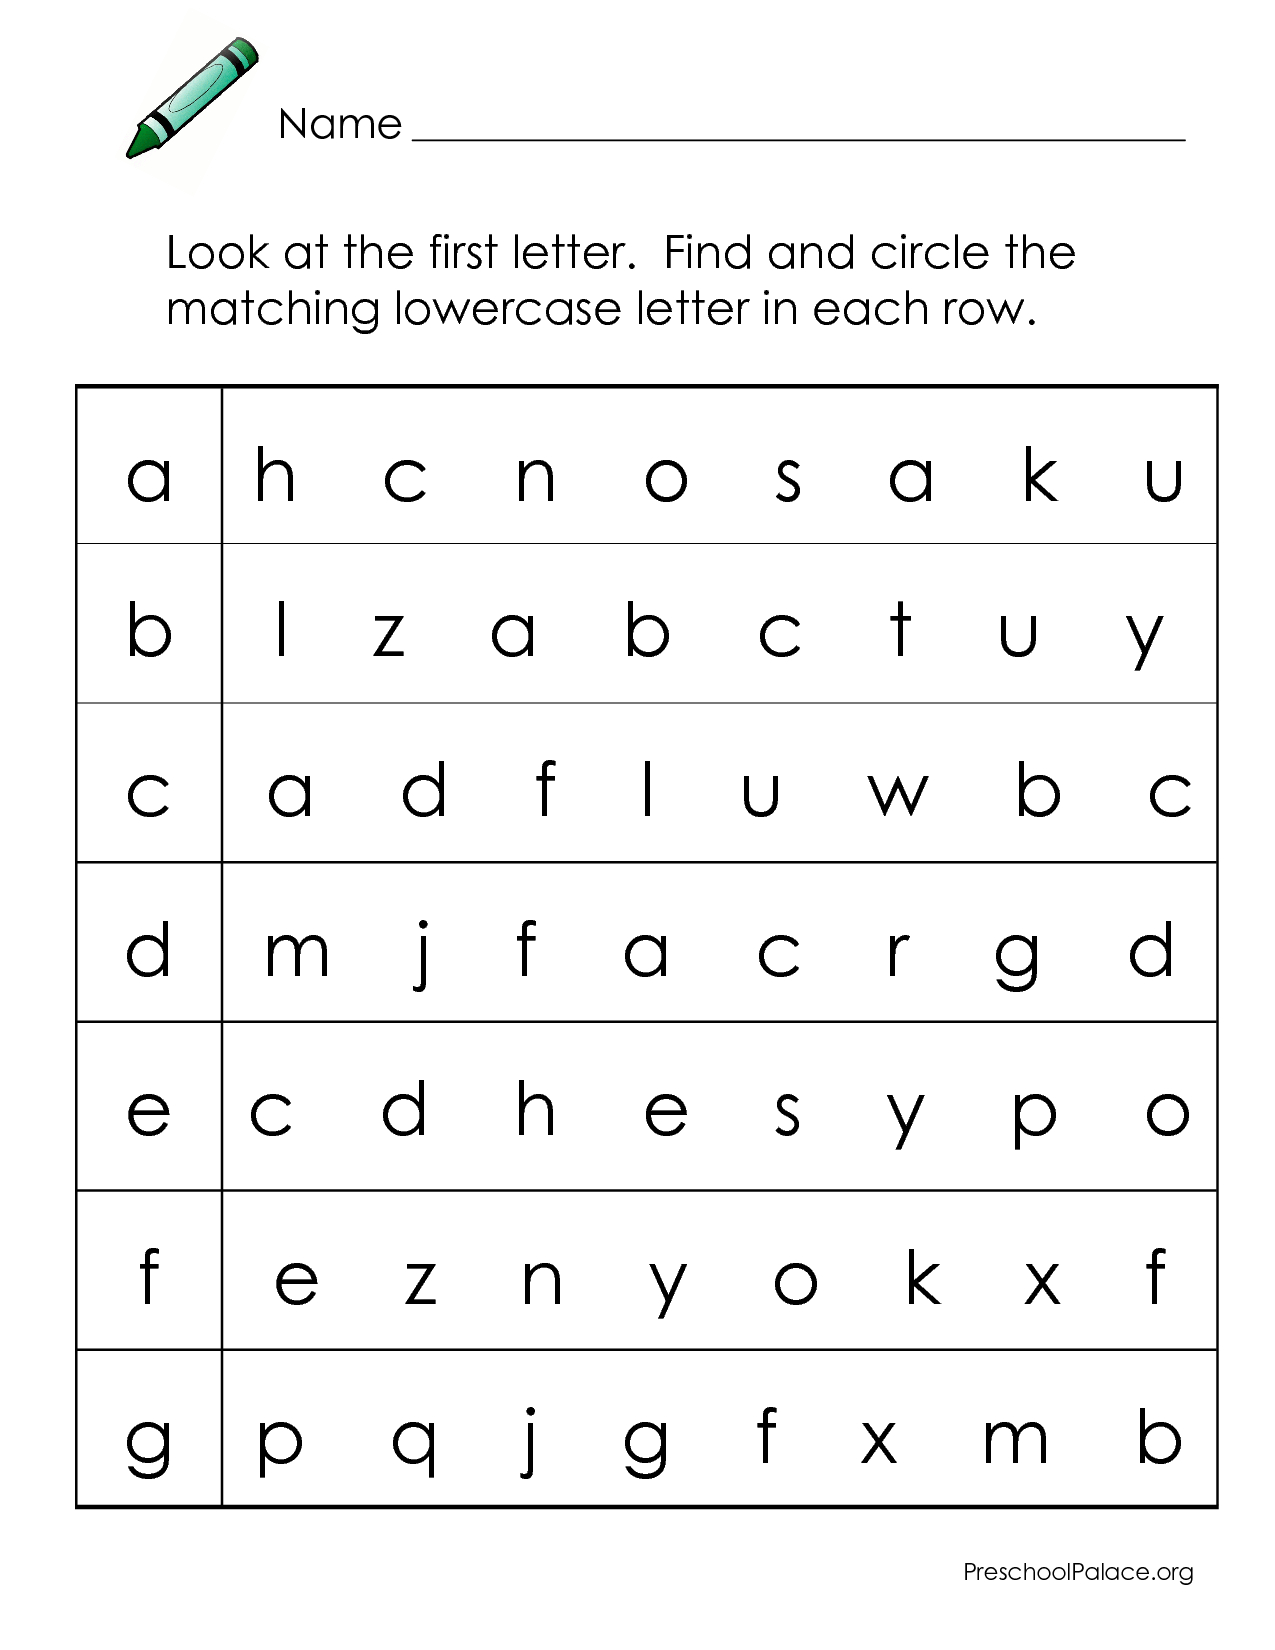 Alphabet Worksheets For Preschoolers | Abcs - Letter within Alphabet Activity Worksheets